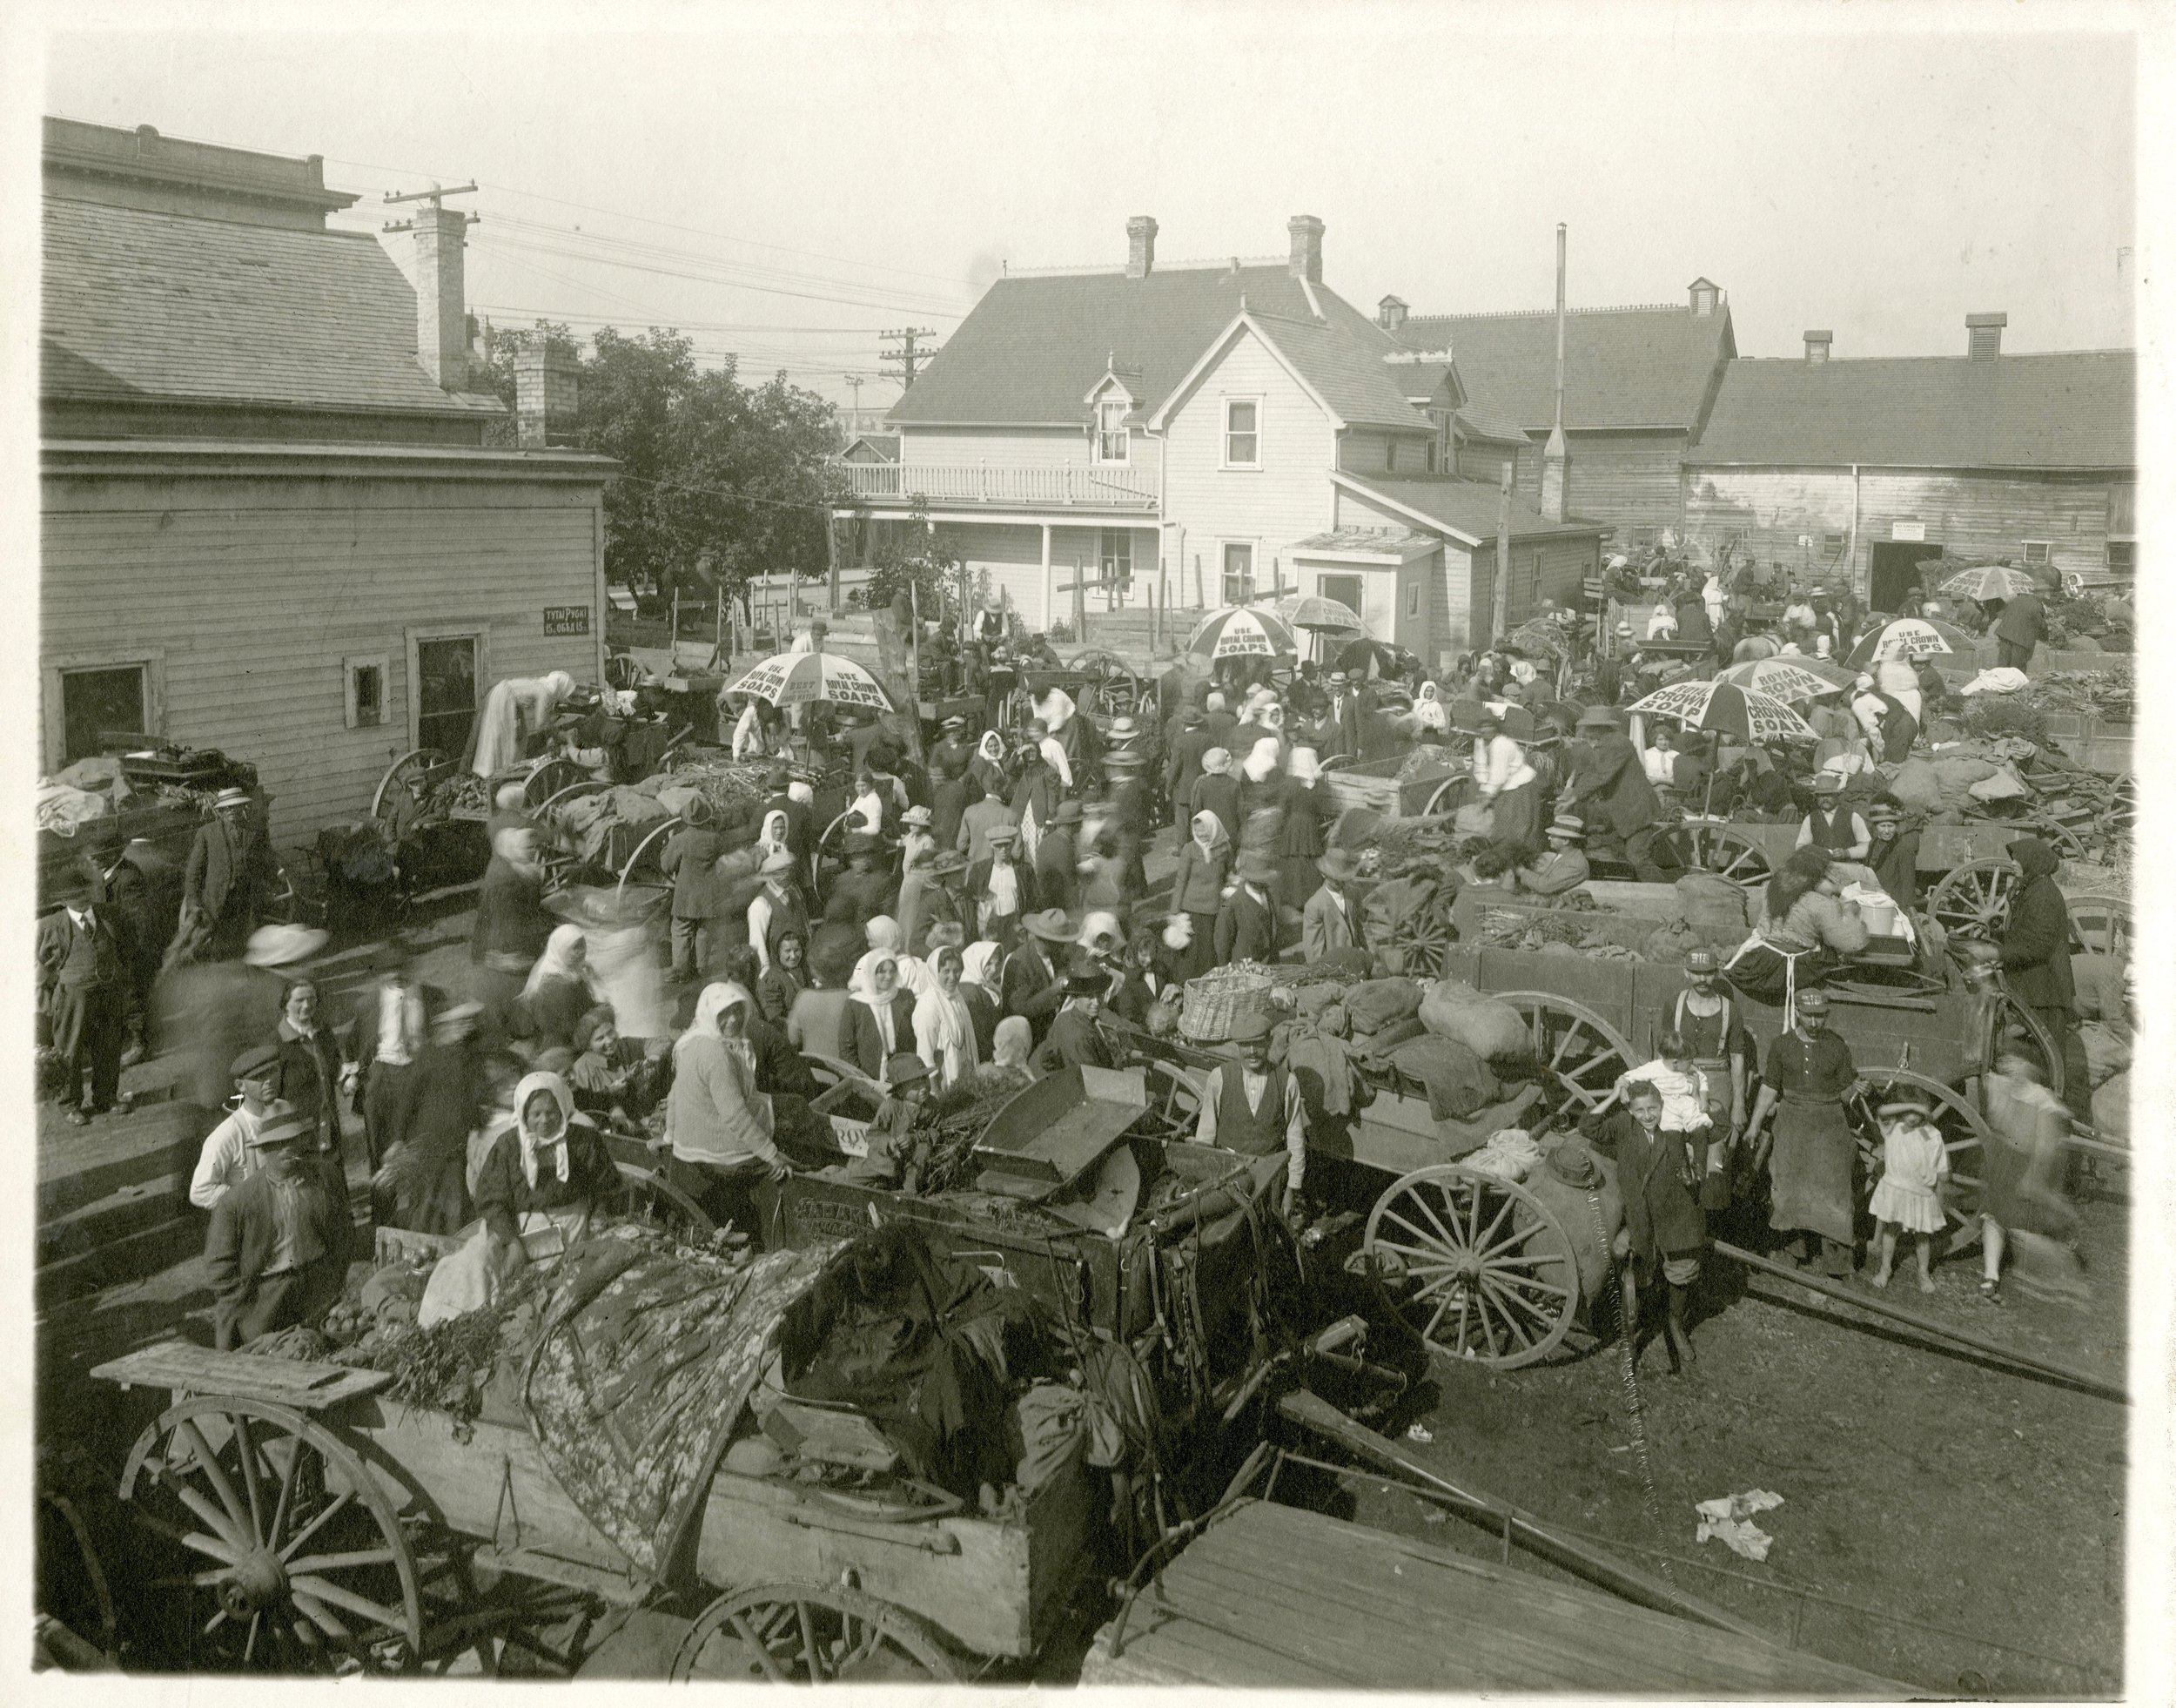  A photo of a Winnipeg farmer’s market in the early 1900s 